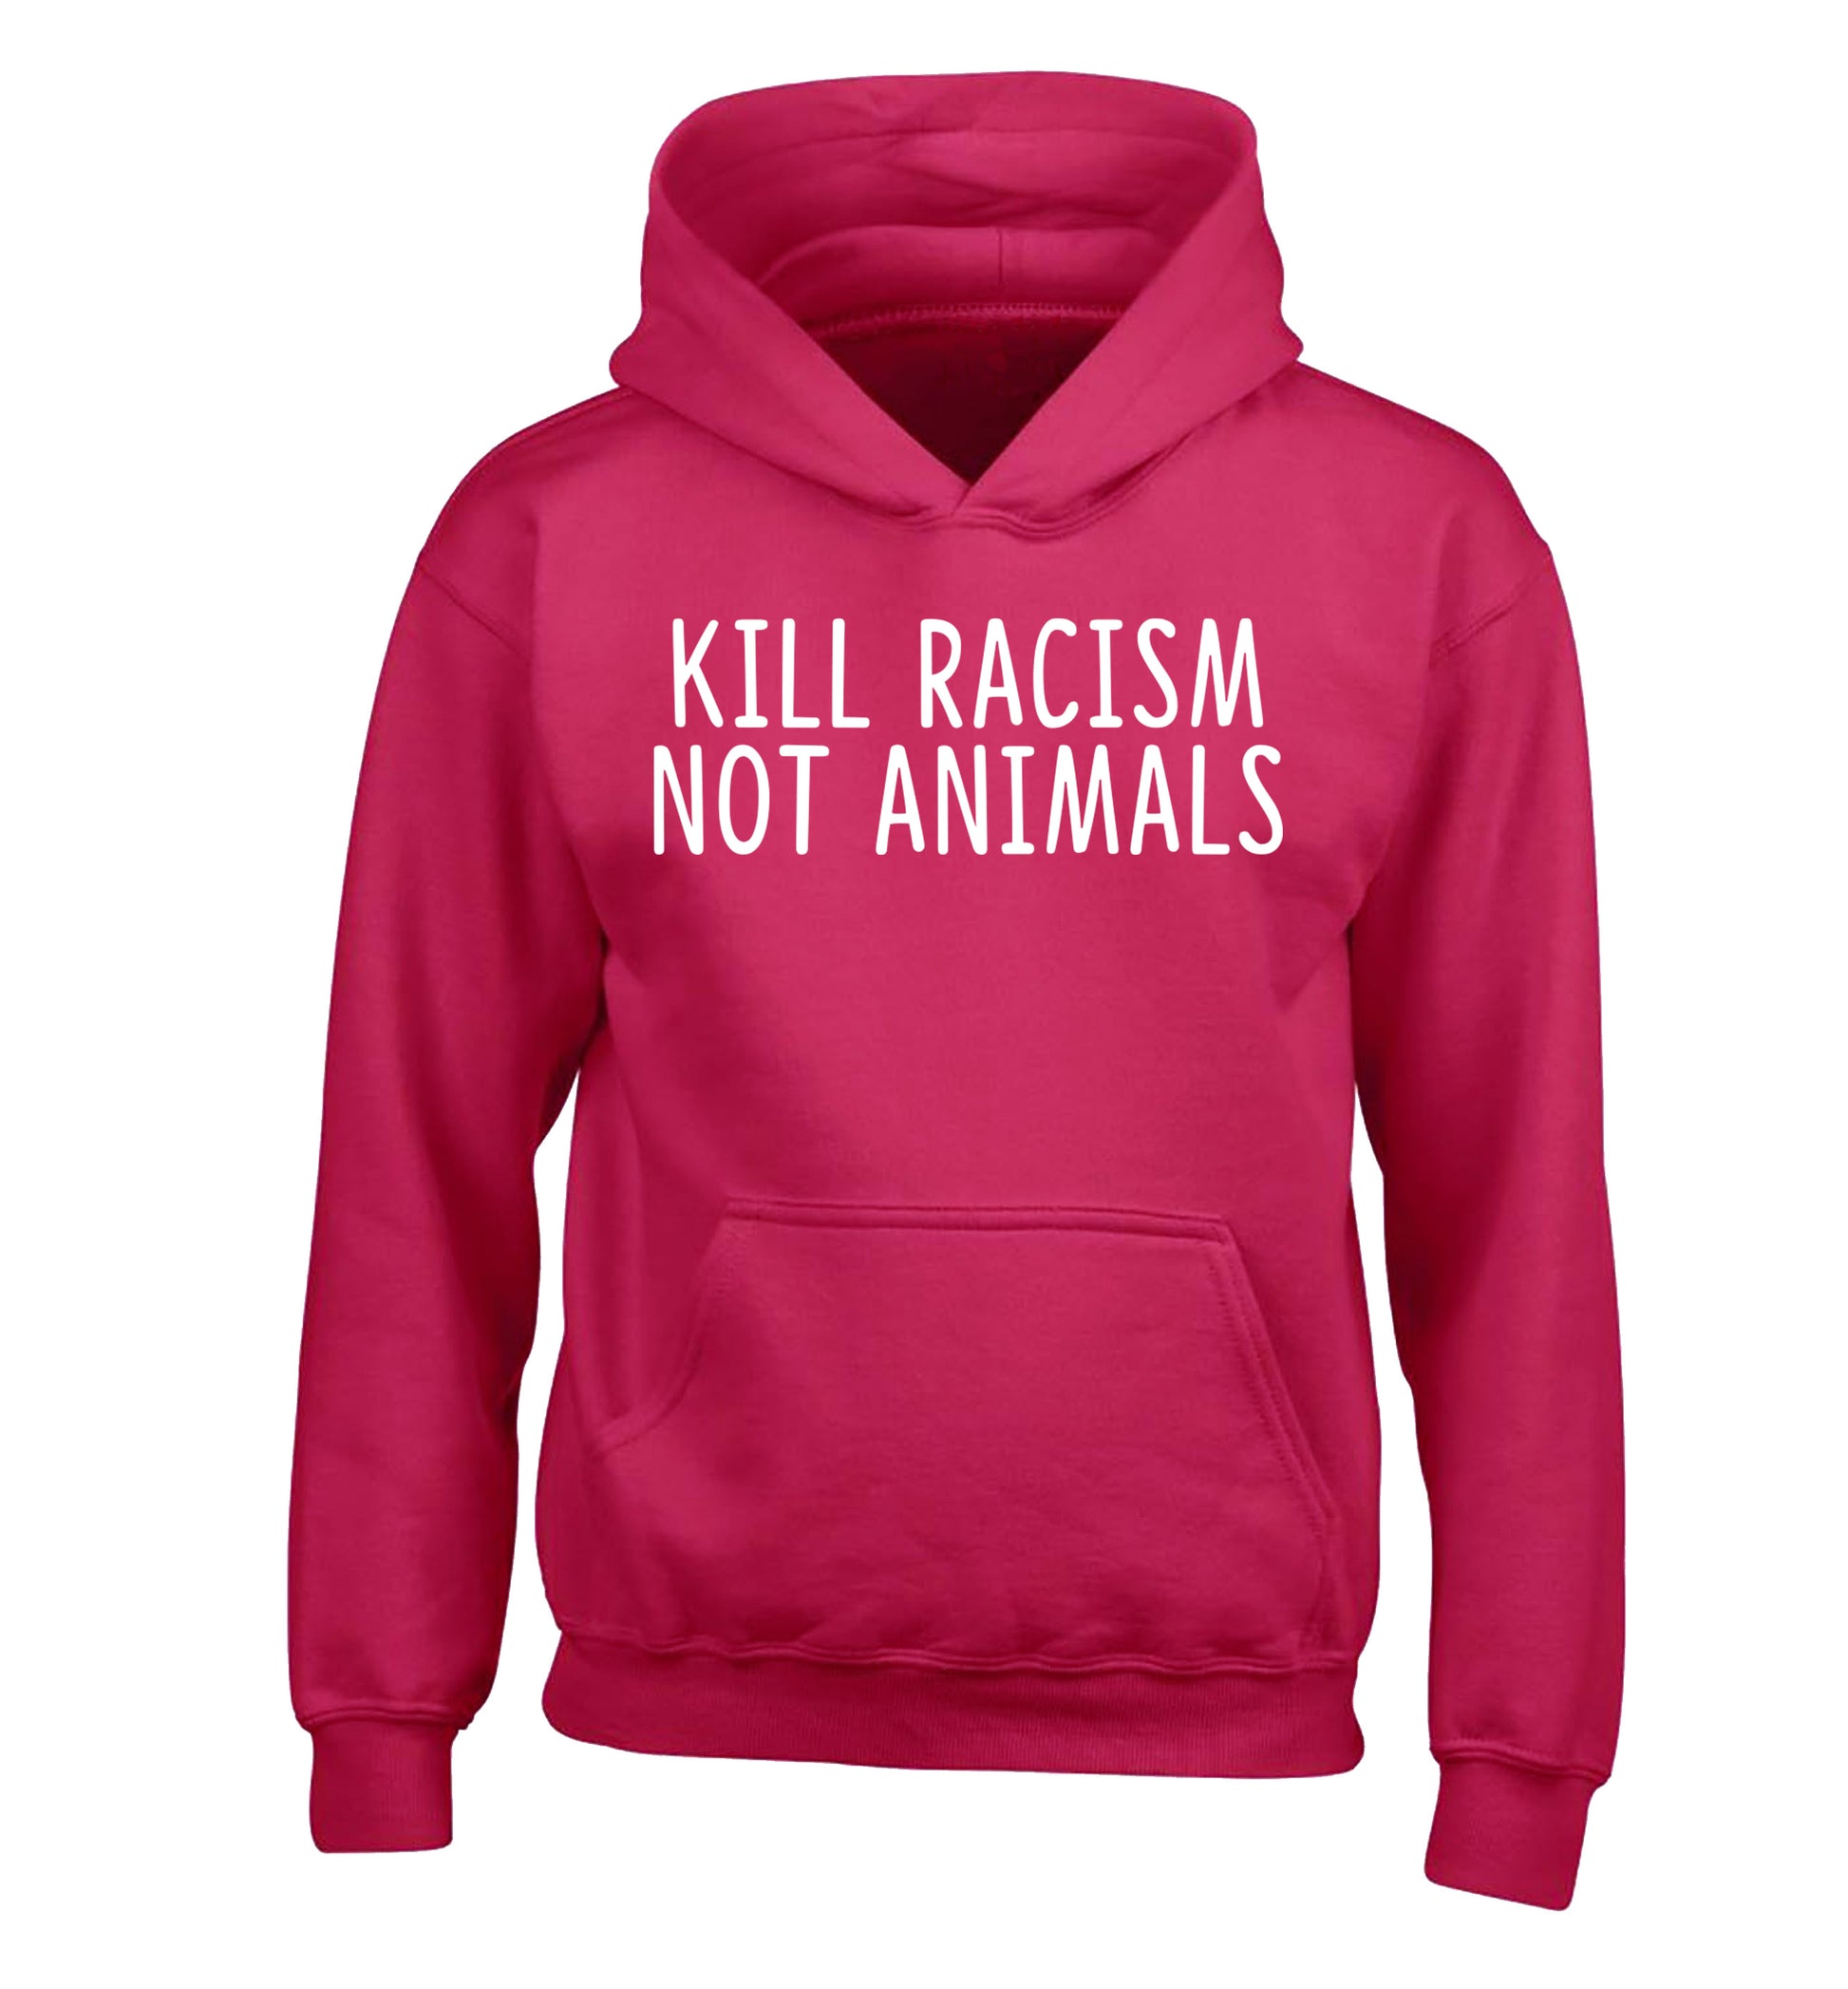 Kill Racism Not Animals children's pink hoodie 12-13 Years